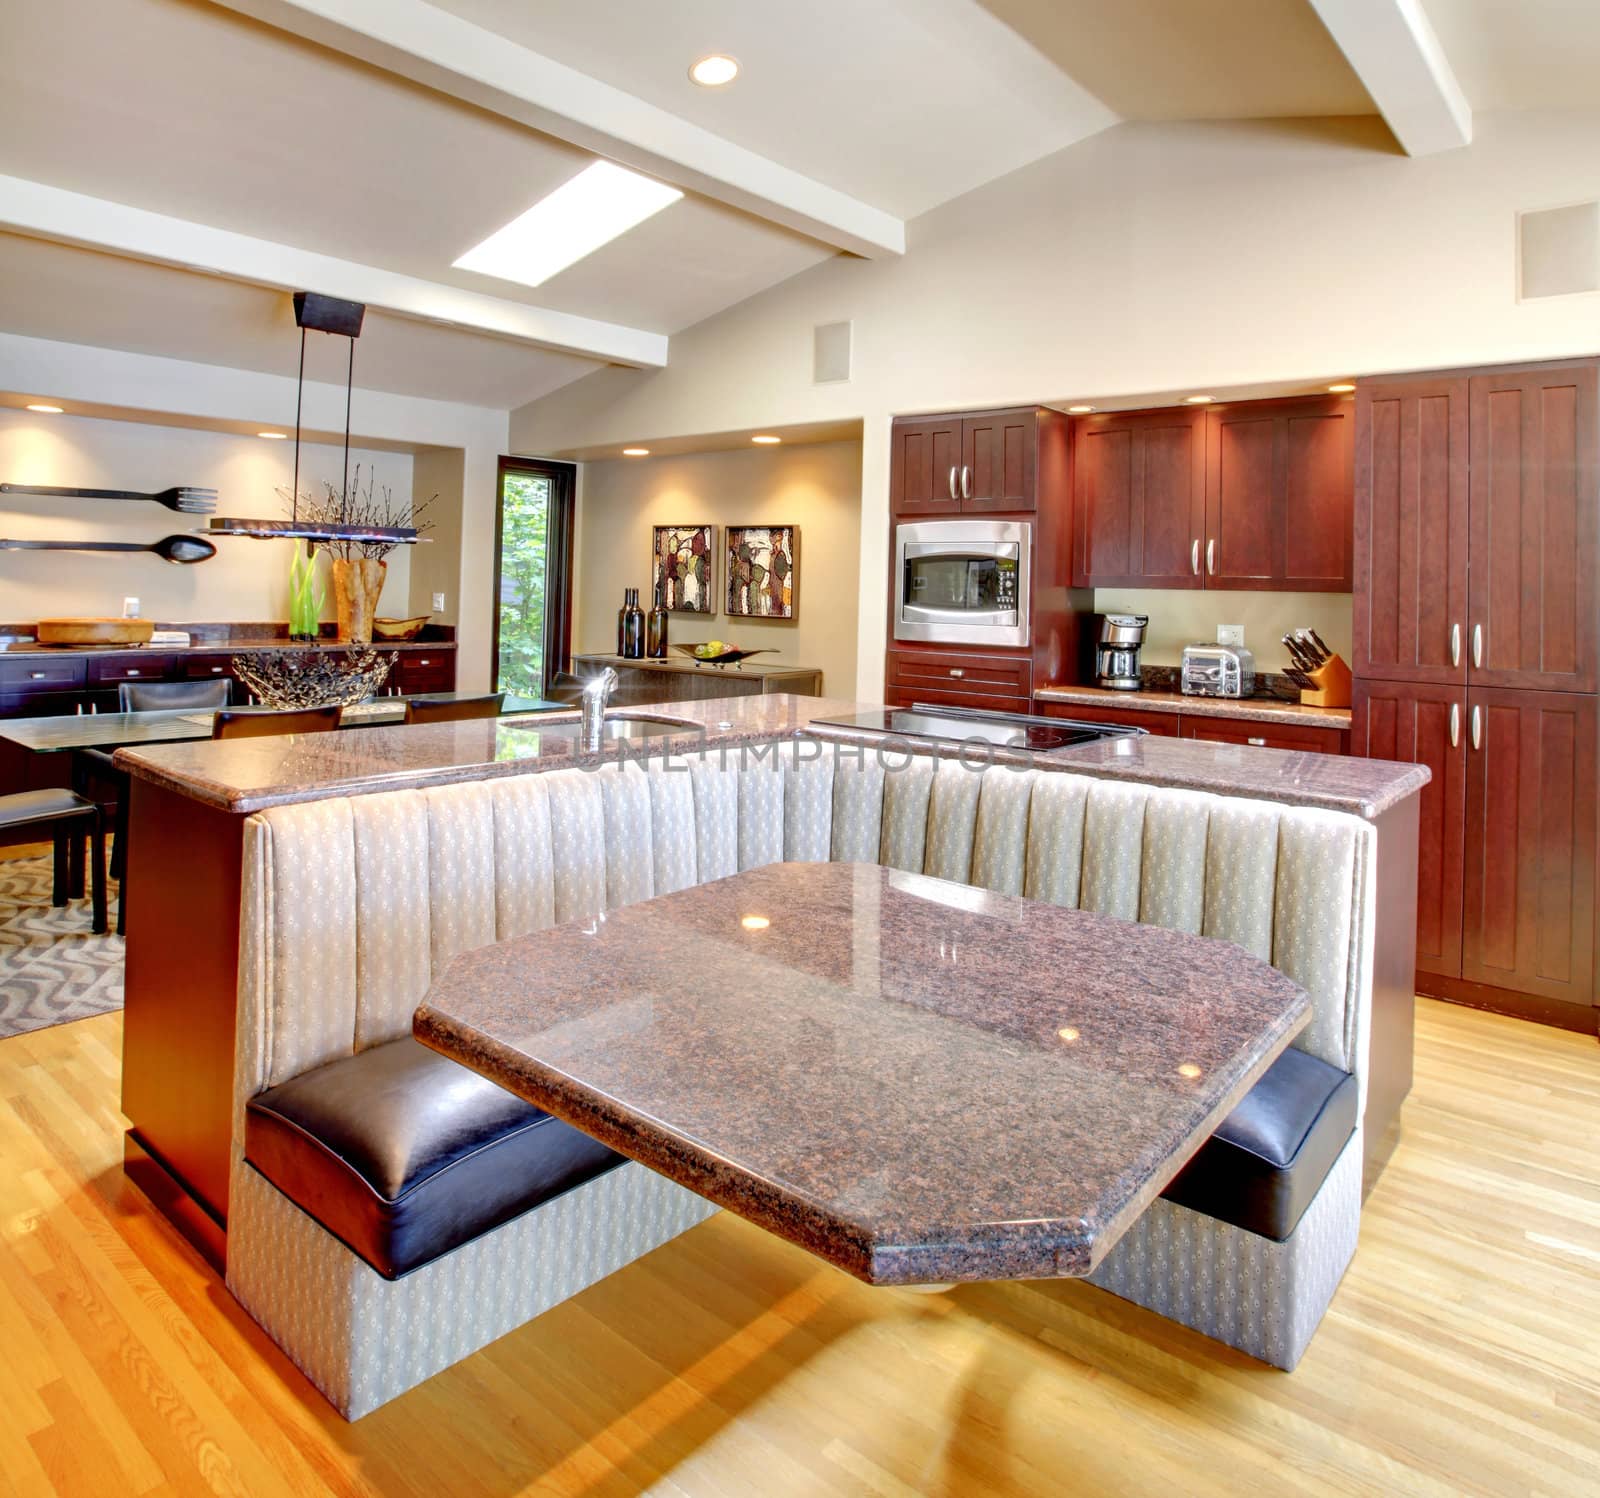 Luxury mahogany Kitchen with modern custom furniture design.